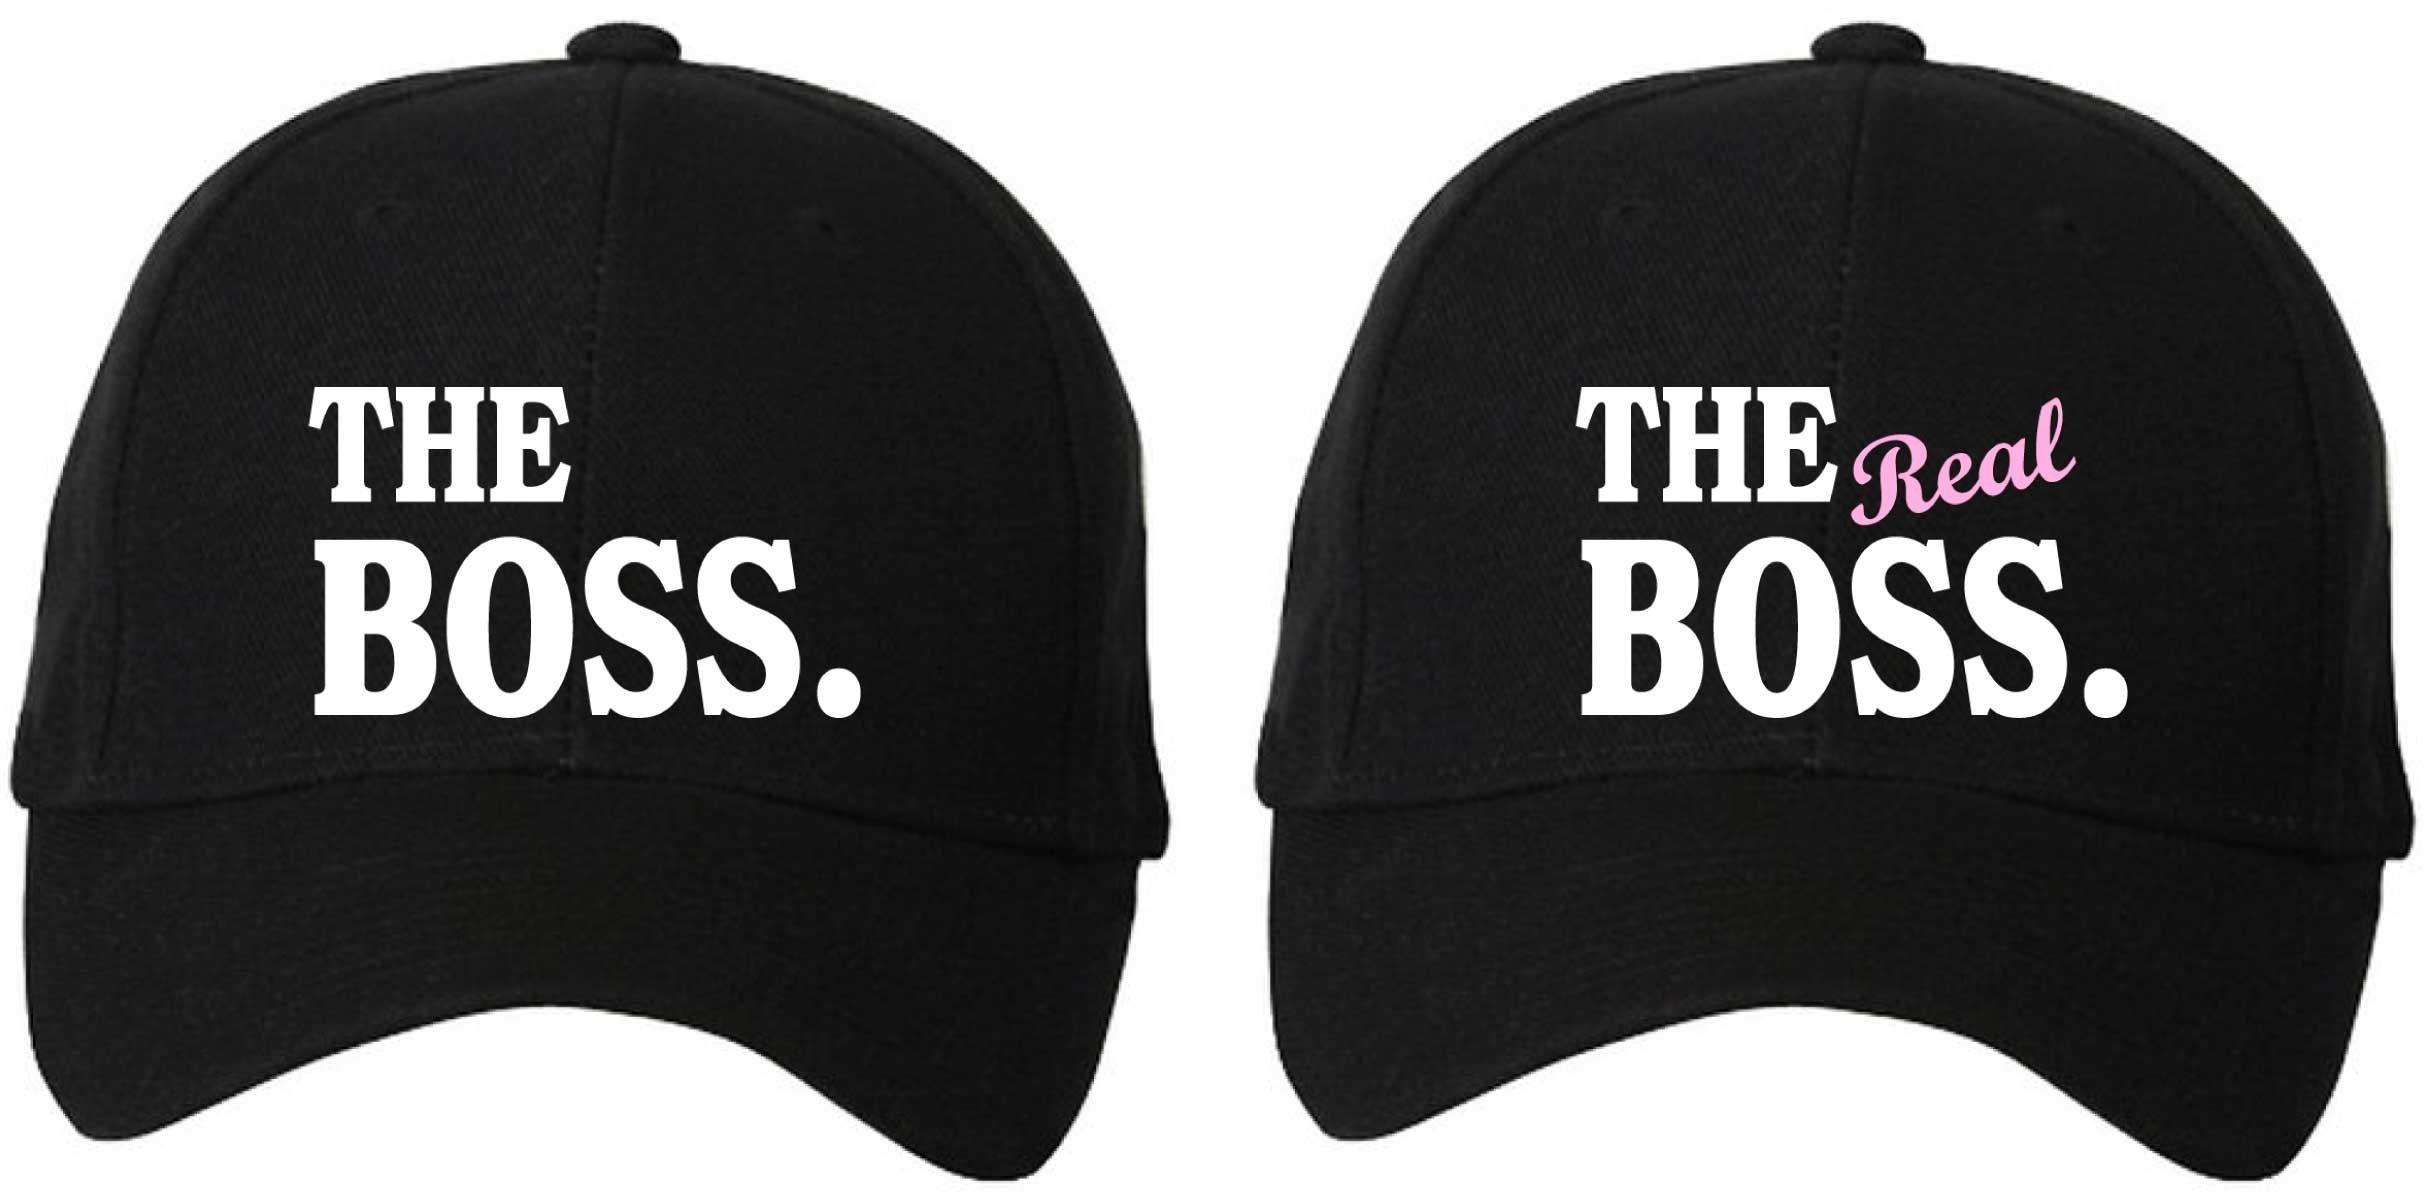 The Boss The Real Boss Черные кепки 60 SECOND MAKEOVER, черный xc2s200 5pqg208i xc2s200 5pqg208 xc2s200 qfp208 новинка